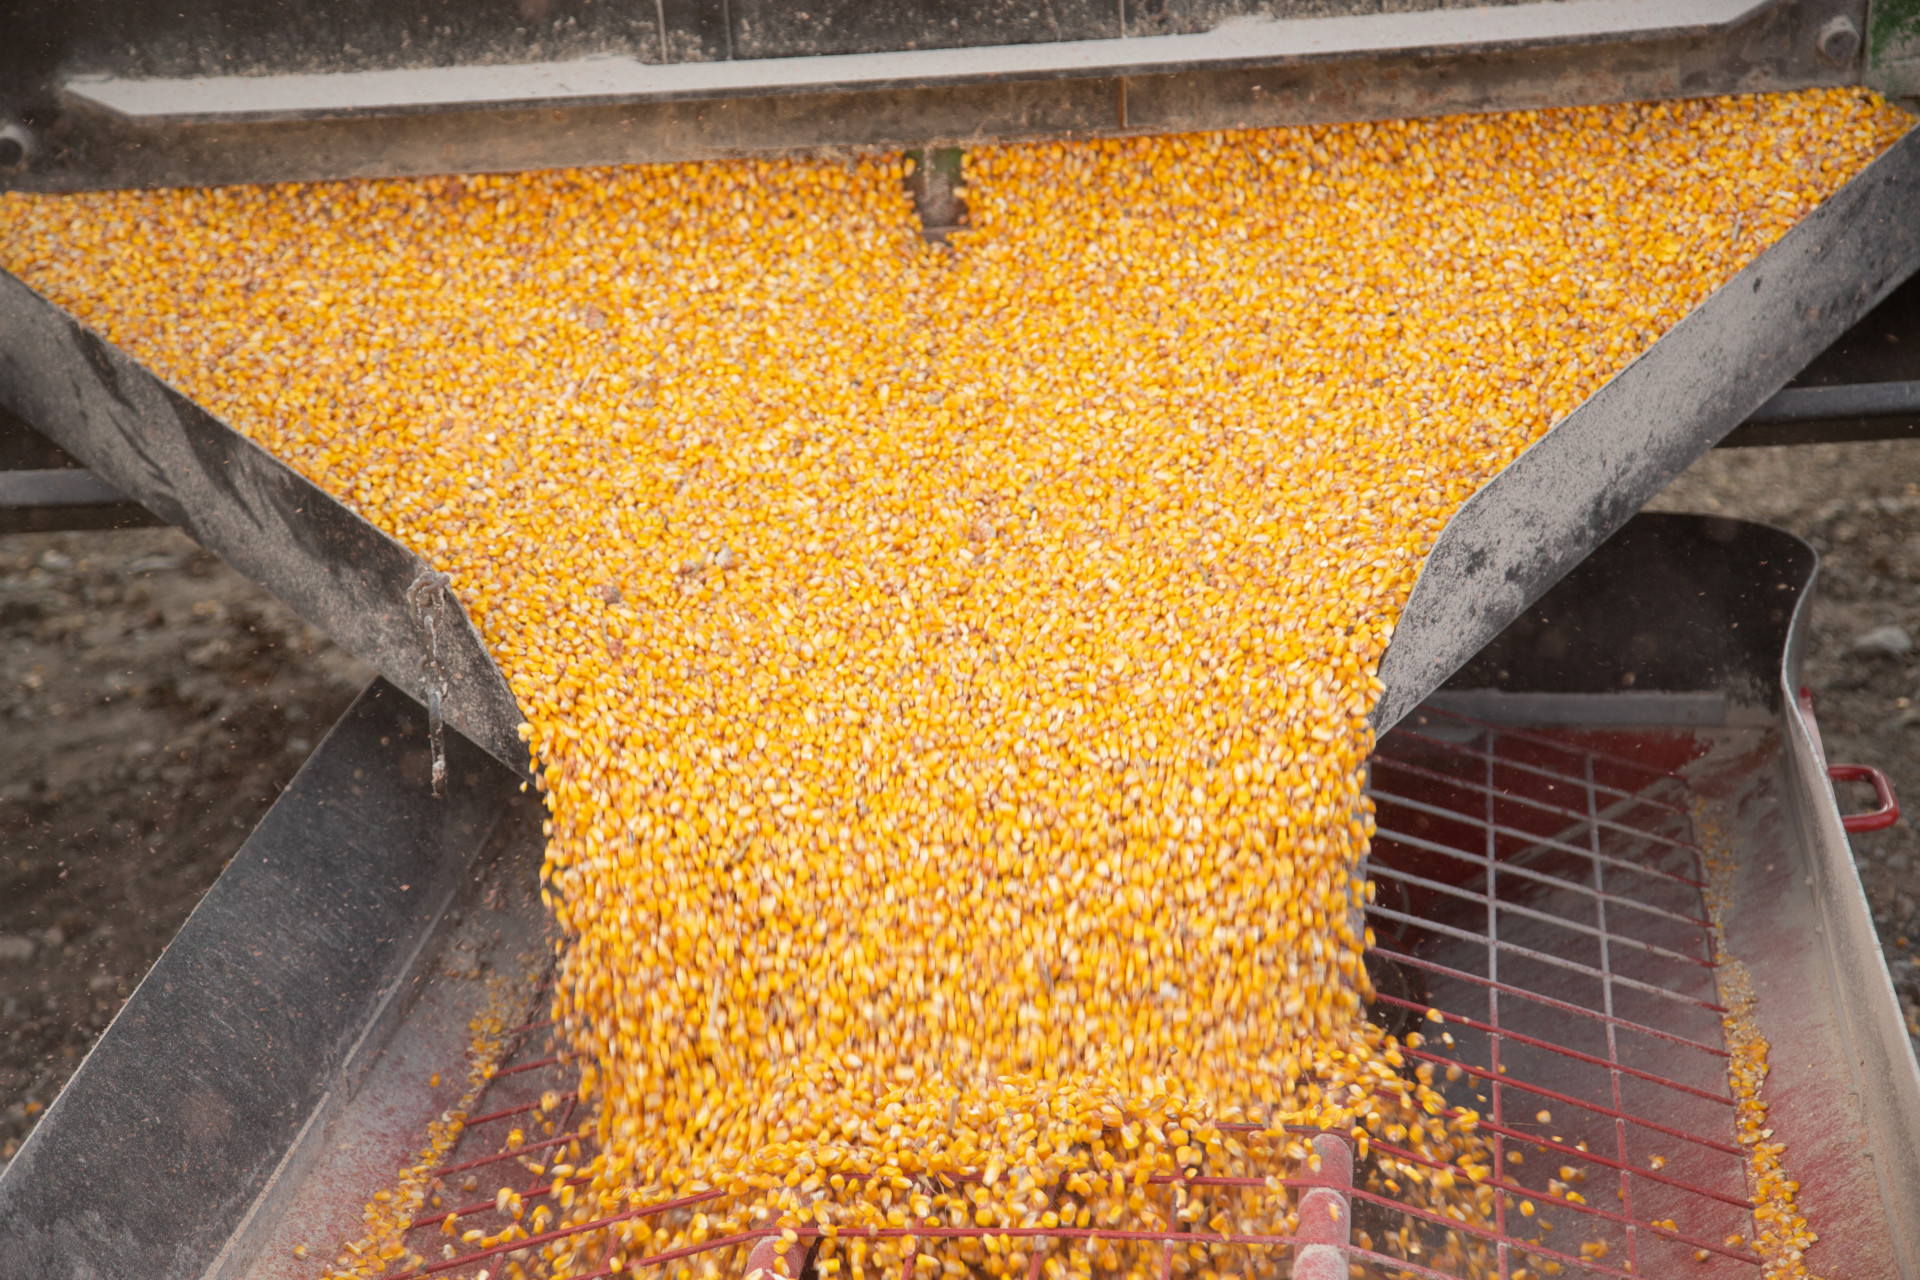 Corn unloading into truck